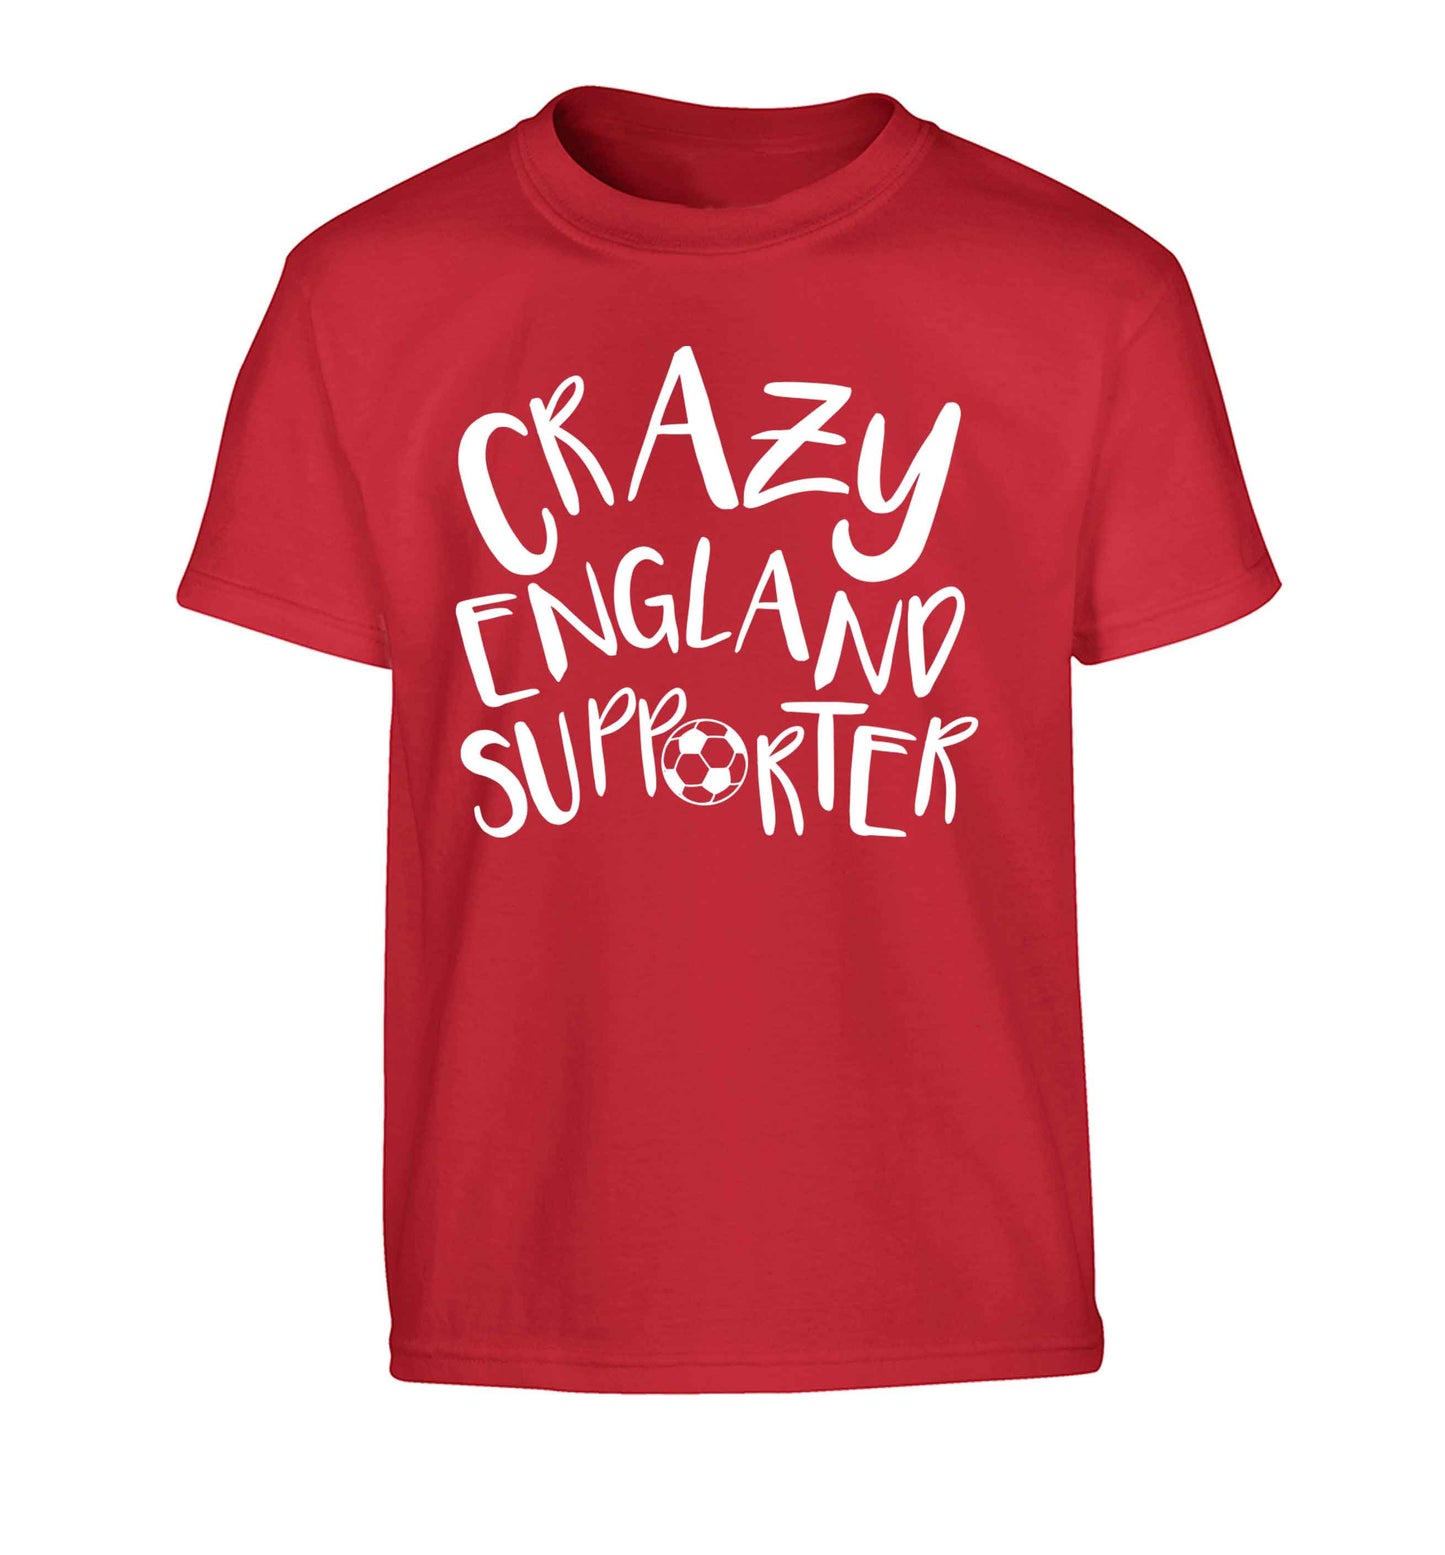 Crazy England supporter Children's red Tshirt 12-13 Years